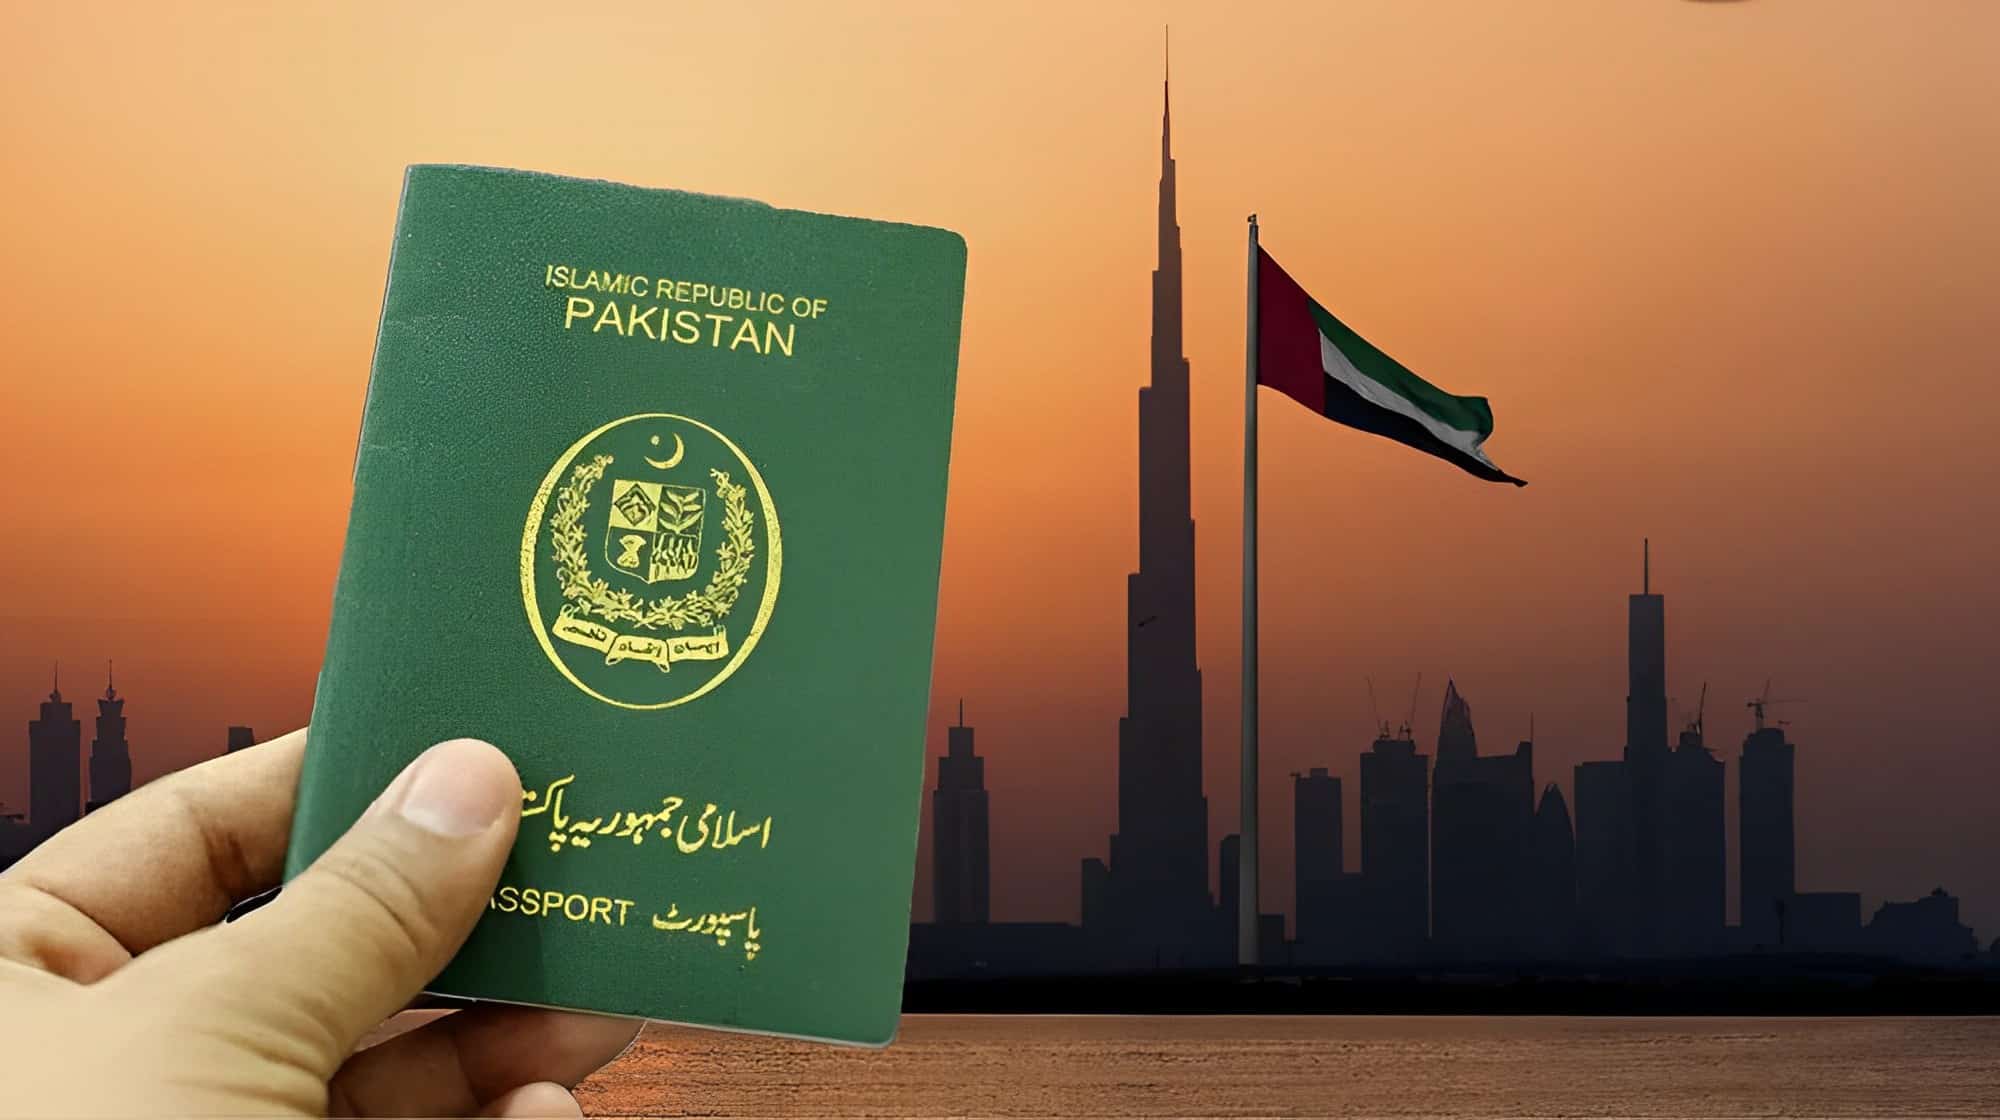 uae visit visa 3 months price pakistan